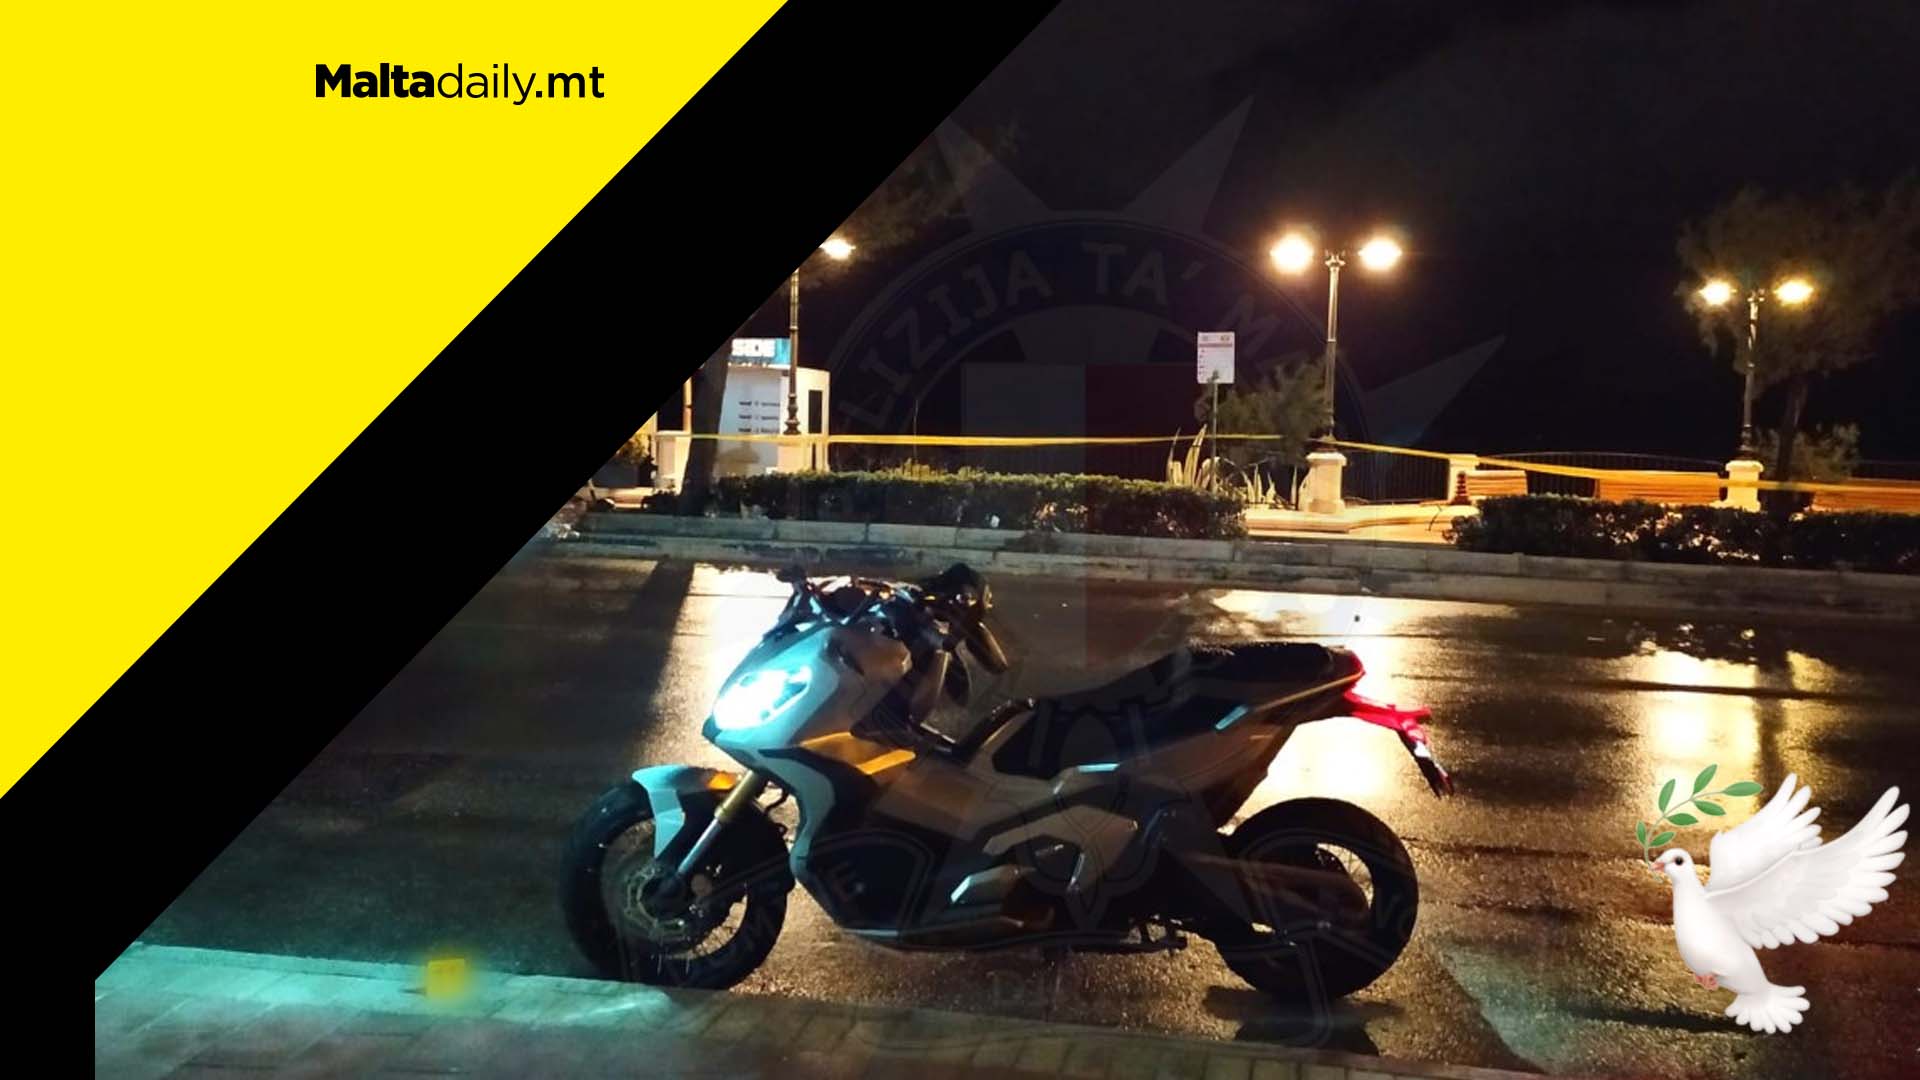 Italian motorcyclist dies after losing control of vehicle in Sliema